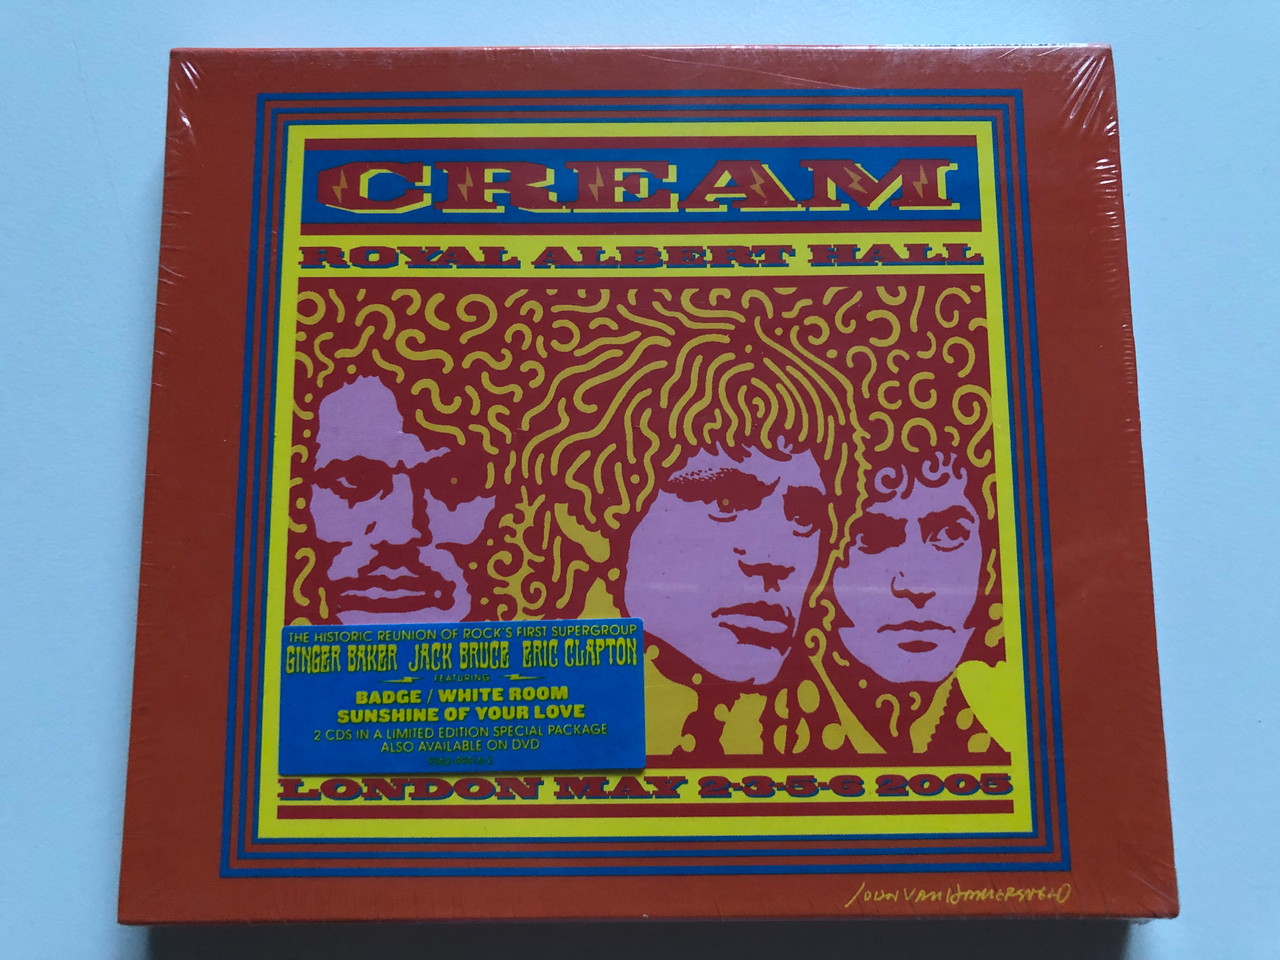 Cream – Royal Albert Hall London May 2-3-5-6 2005 / Reprise Records CD  Audio 2005 - bibleinmylanguage